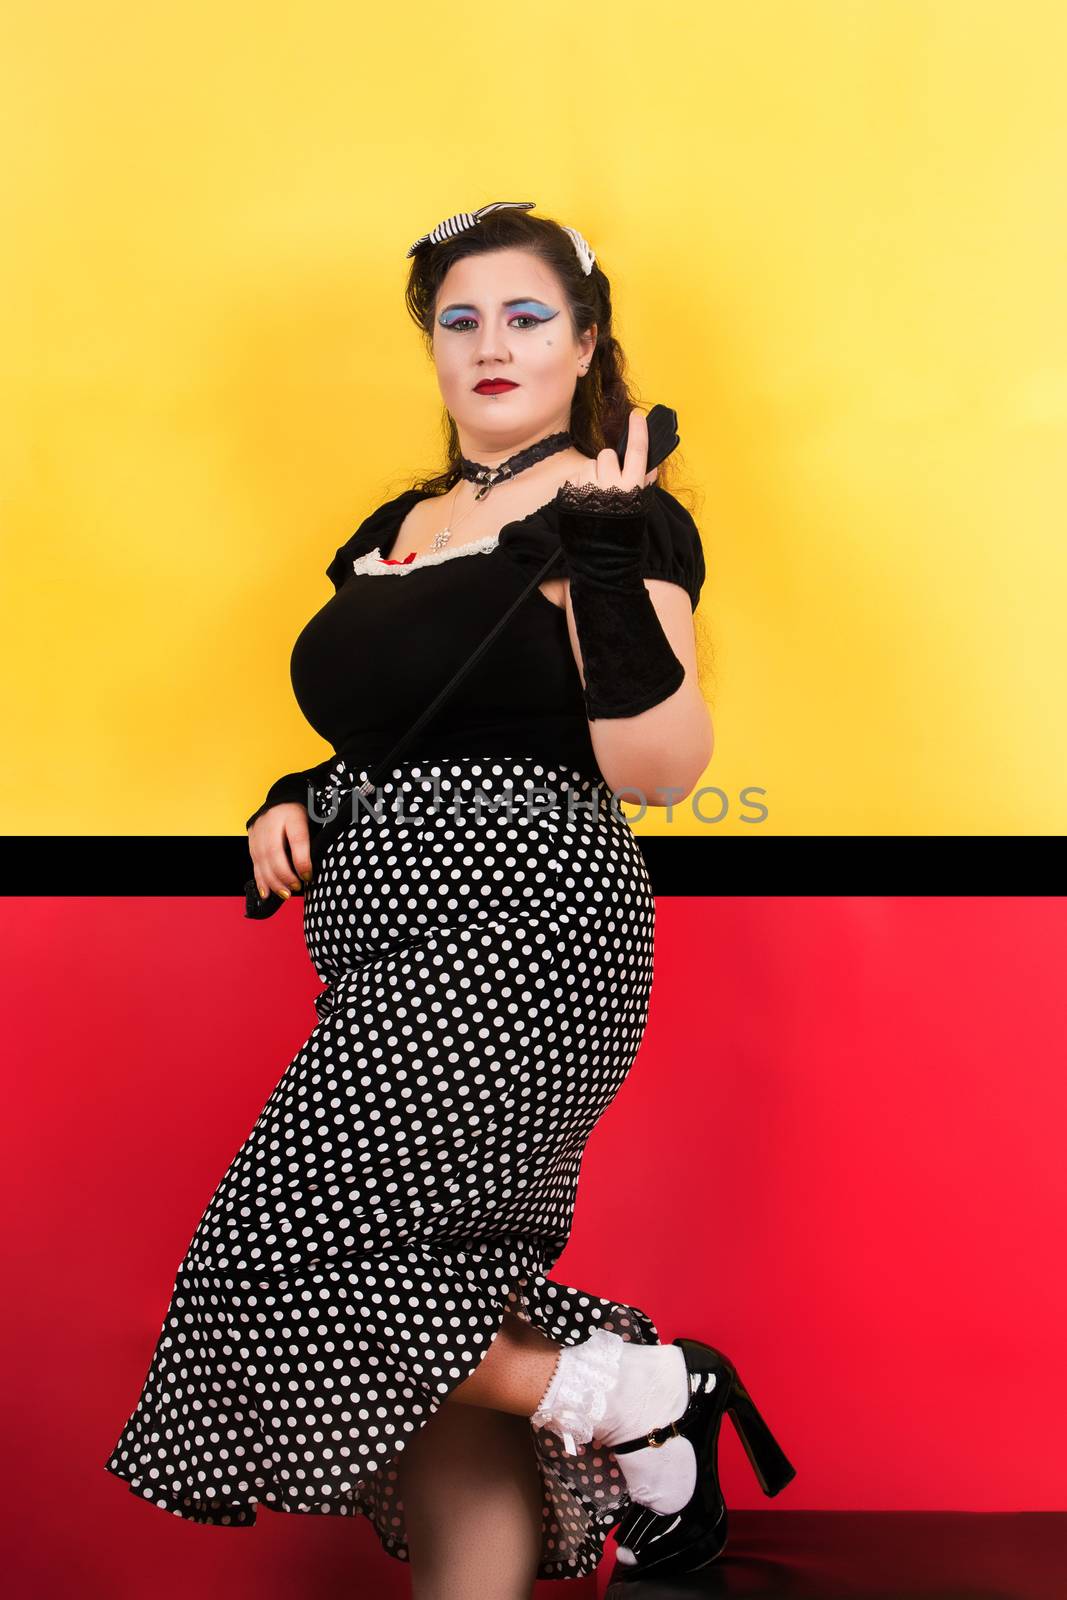 Pinup girl in pop art backdrop by membio